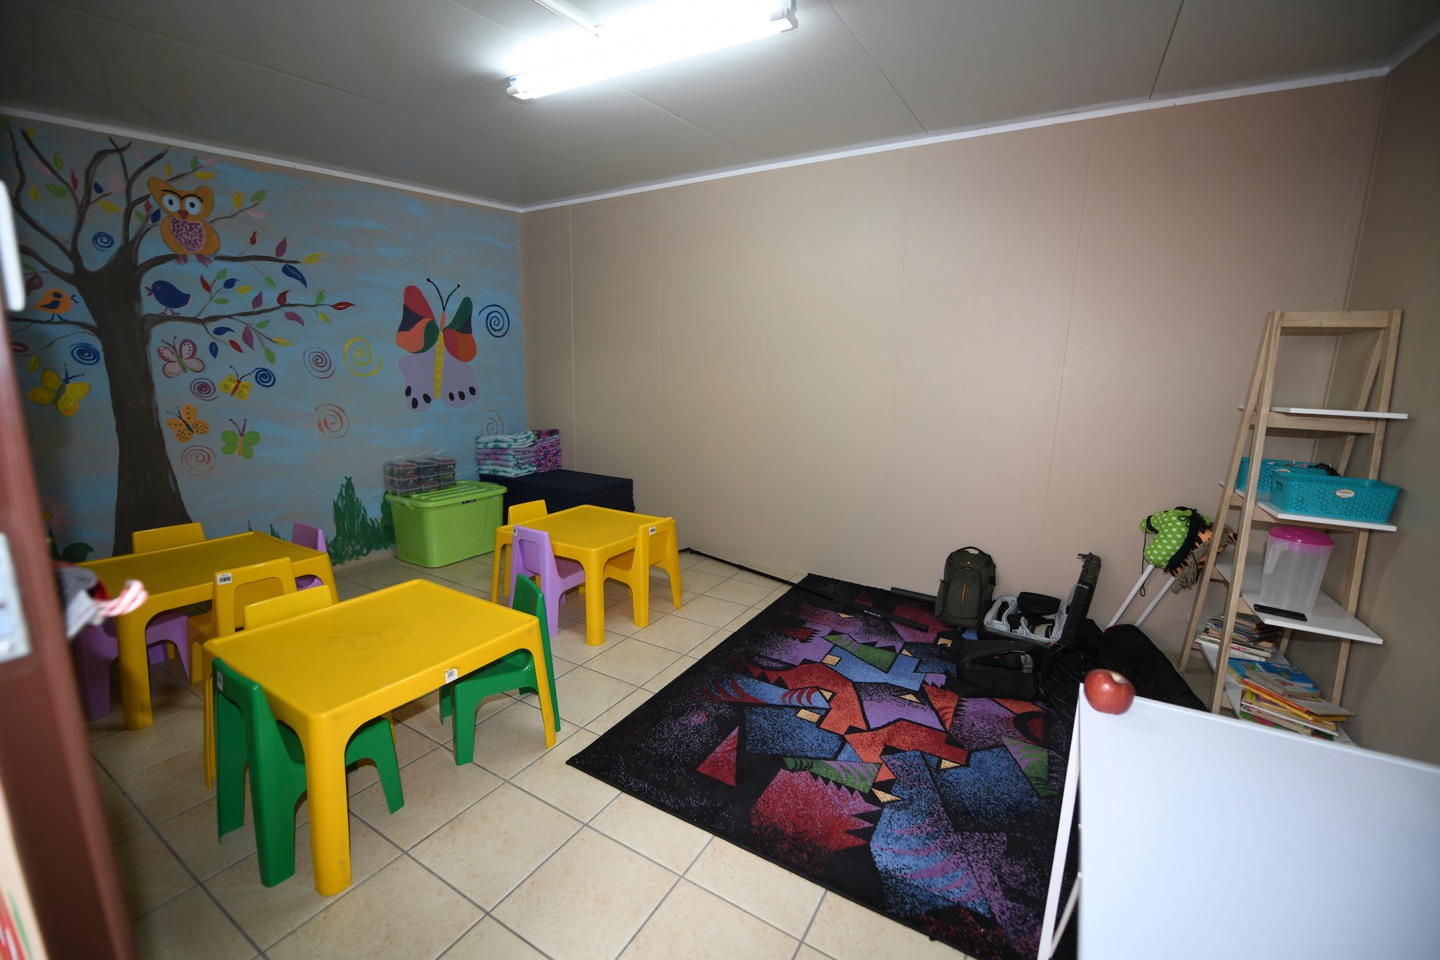 Children's classroom